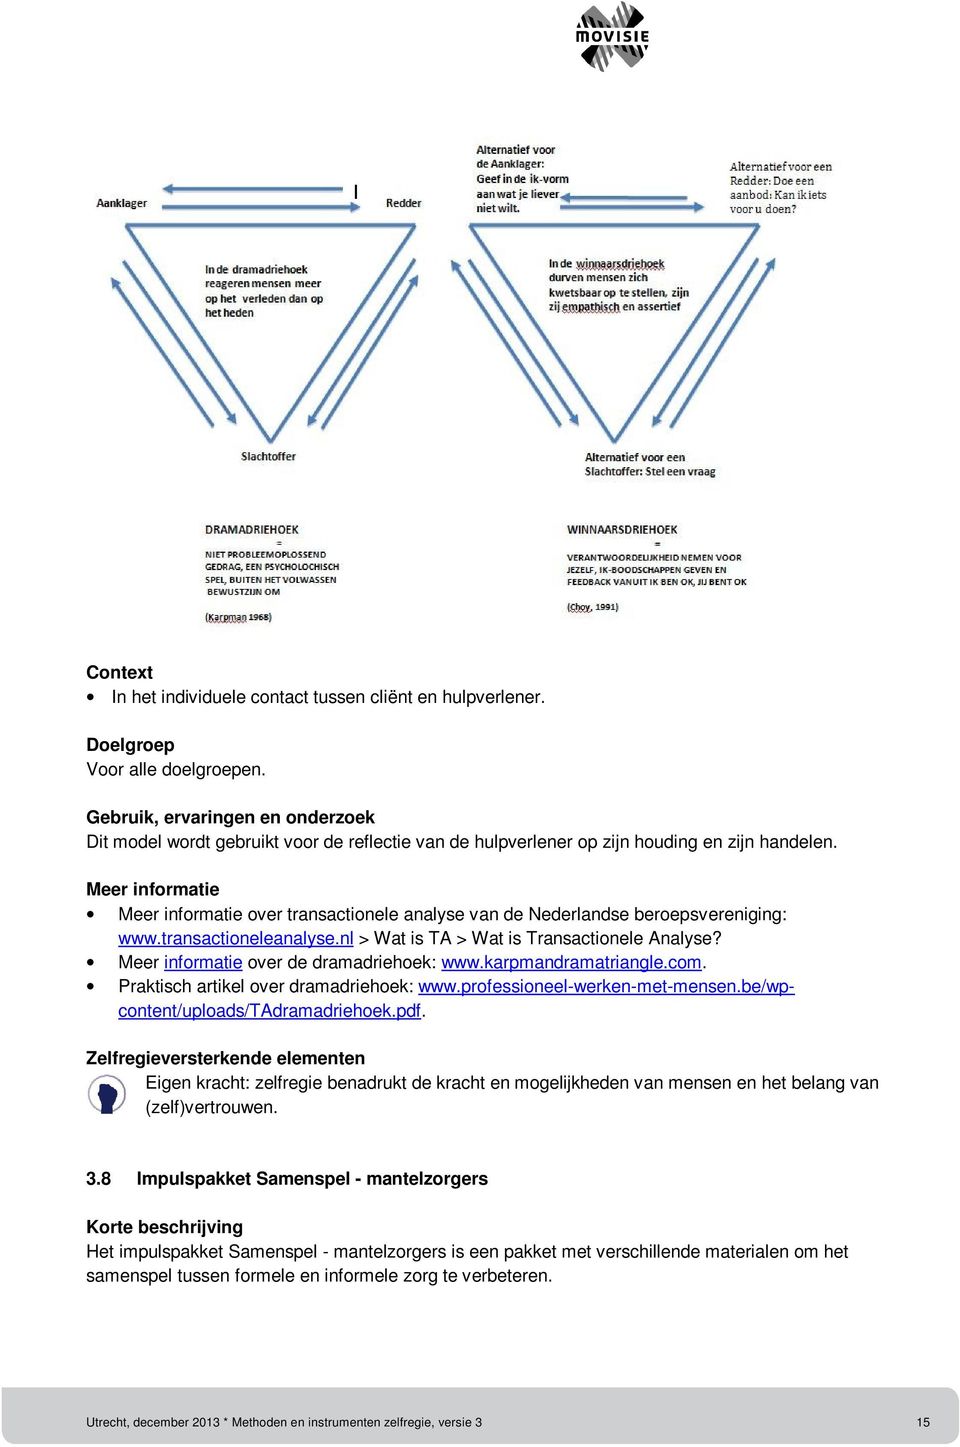 transactioneleanalyse.nl > Wat is TA > Wat is Transactionele Analyse? over de dramadriehoek: www.karpmandramatriangle.com. Praktisch artikel over dramadriehoek: www.professioneel-werken-met-mensen.